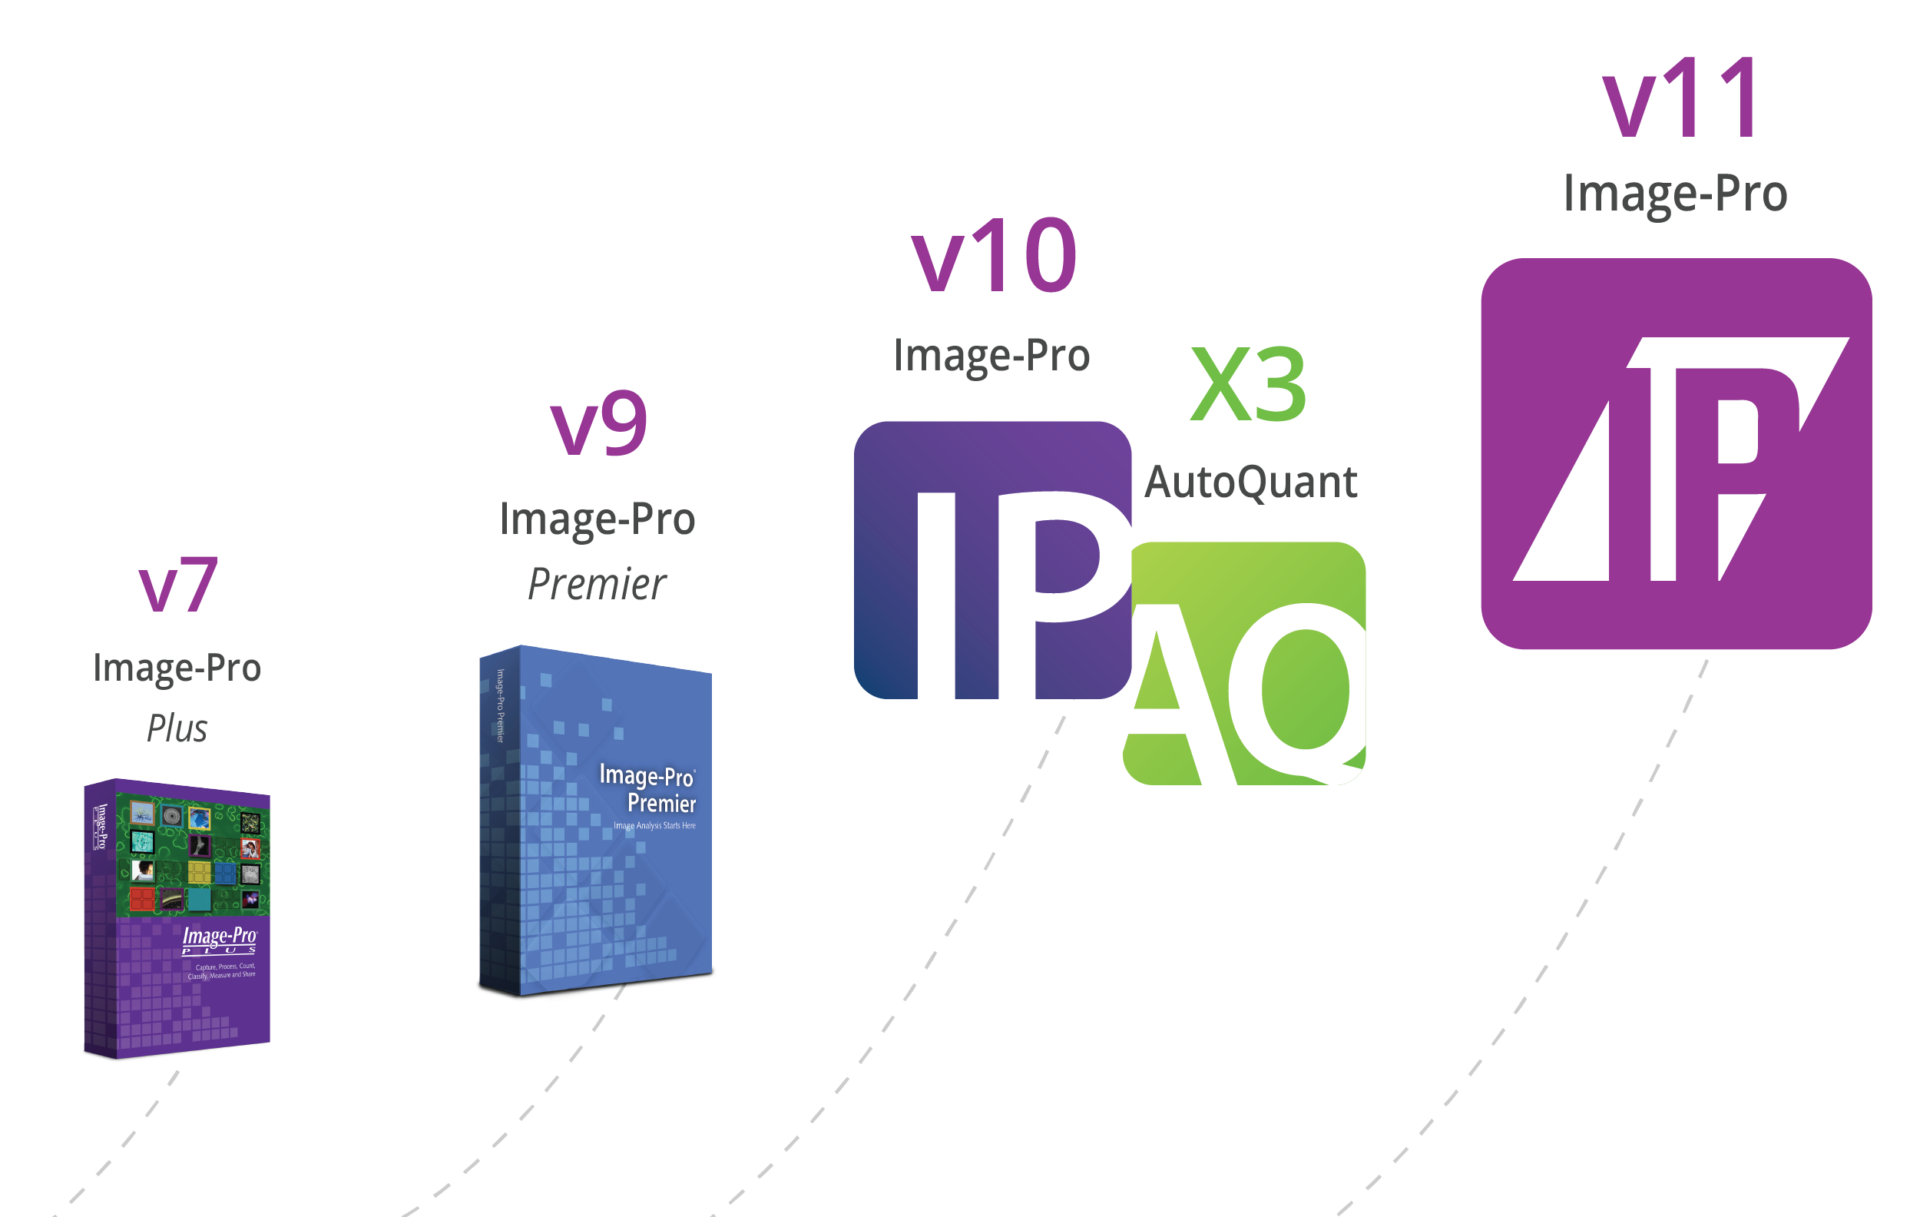 Image-Pro v11 One platform for all your needs